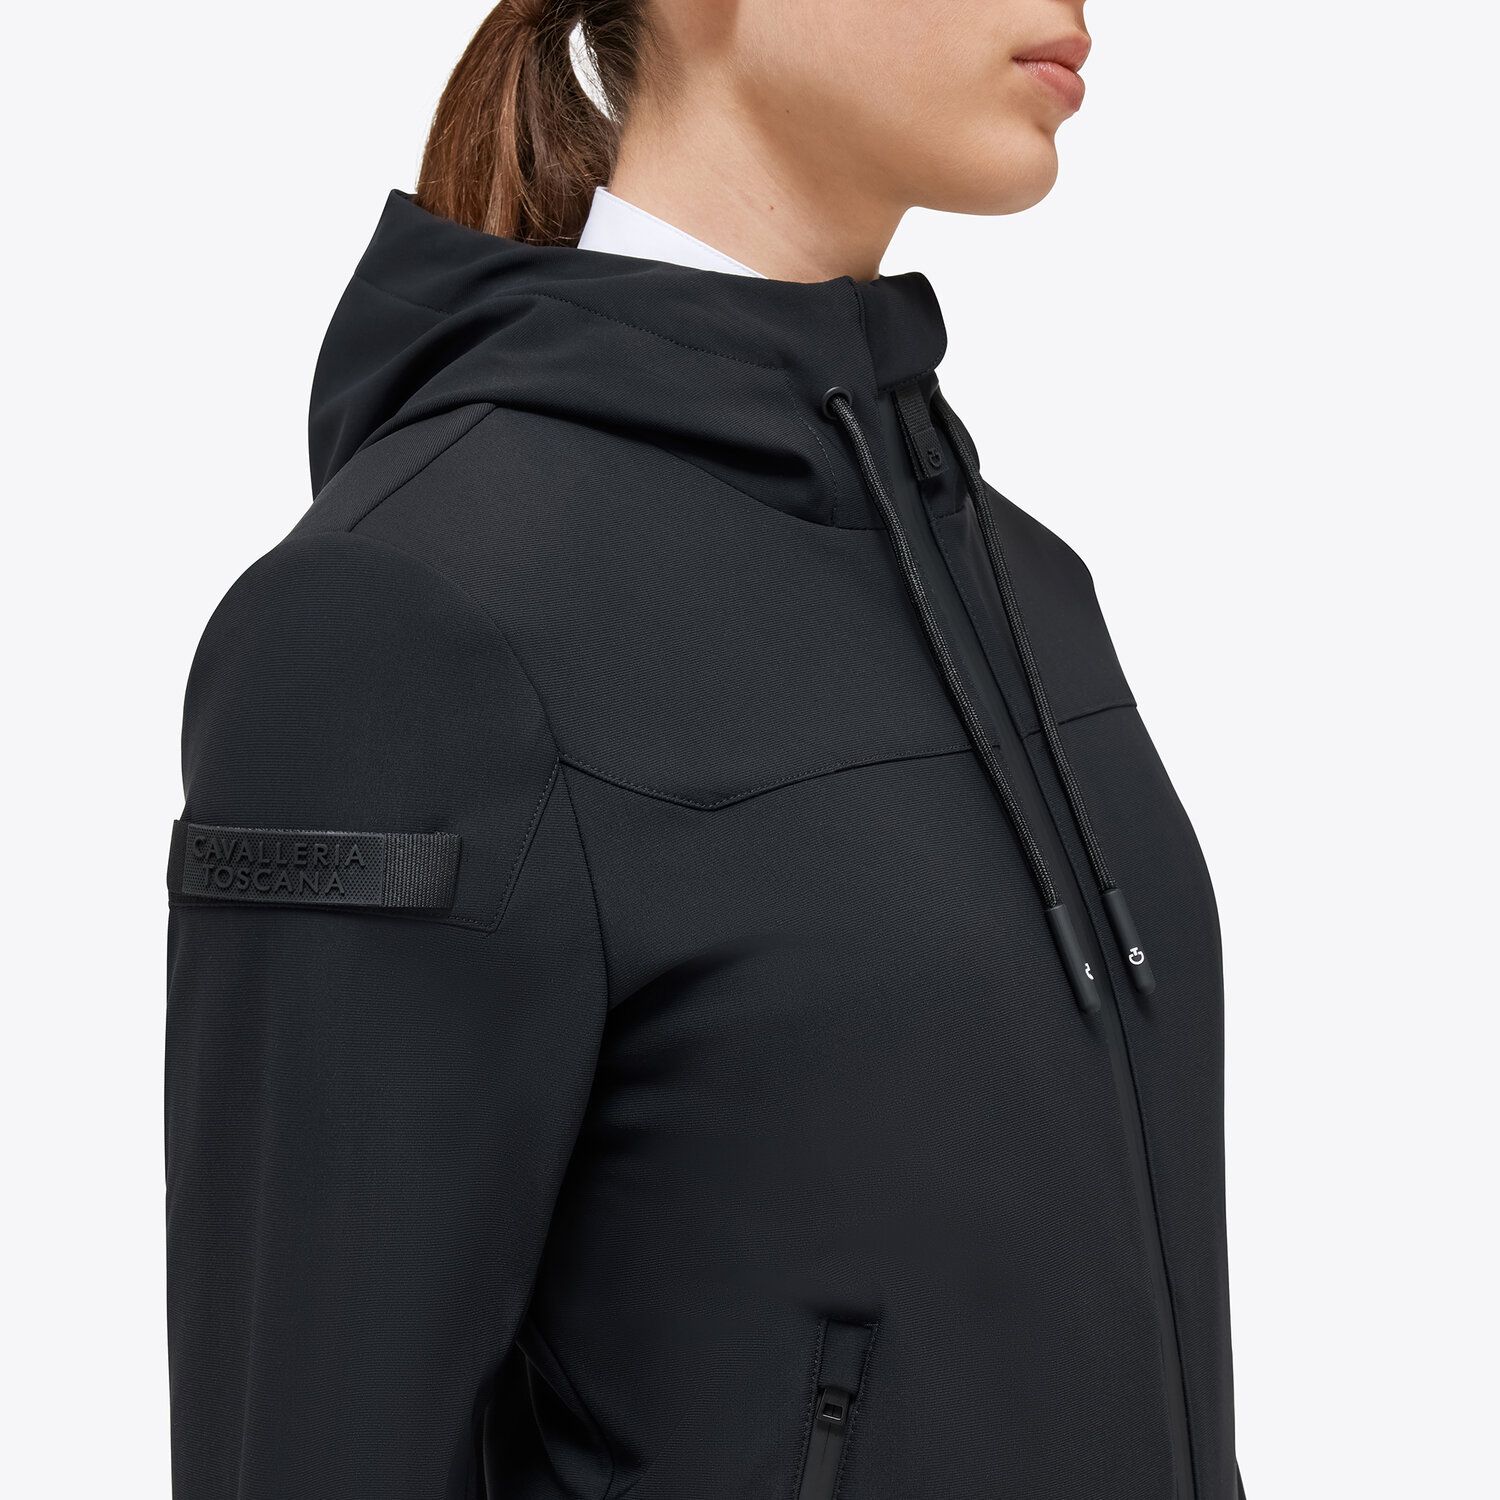 Softshell jacket for women in black